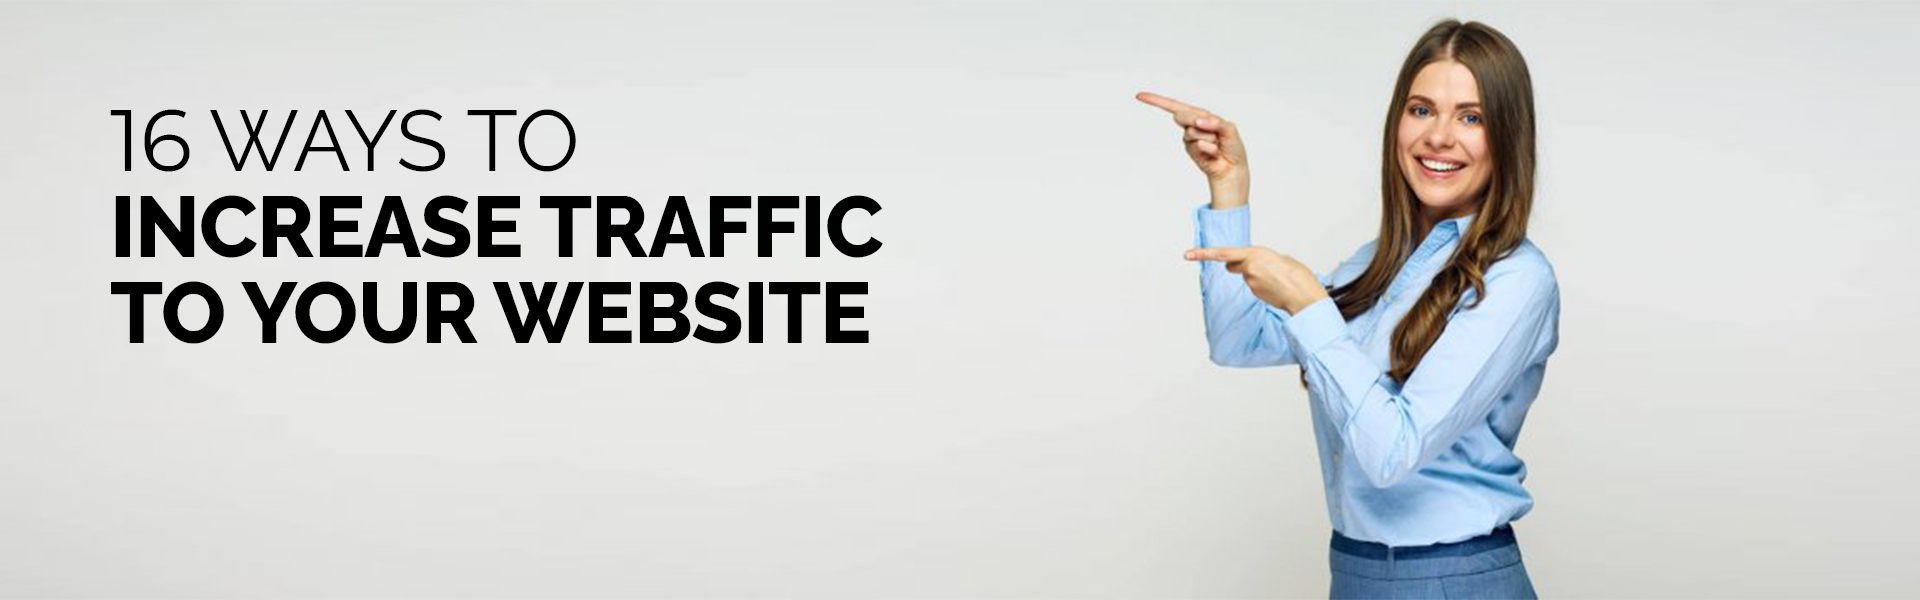 Increase website traffic -banner